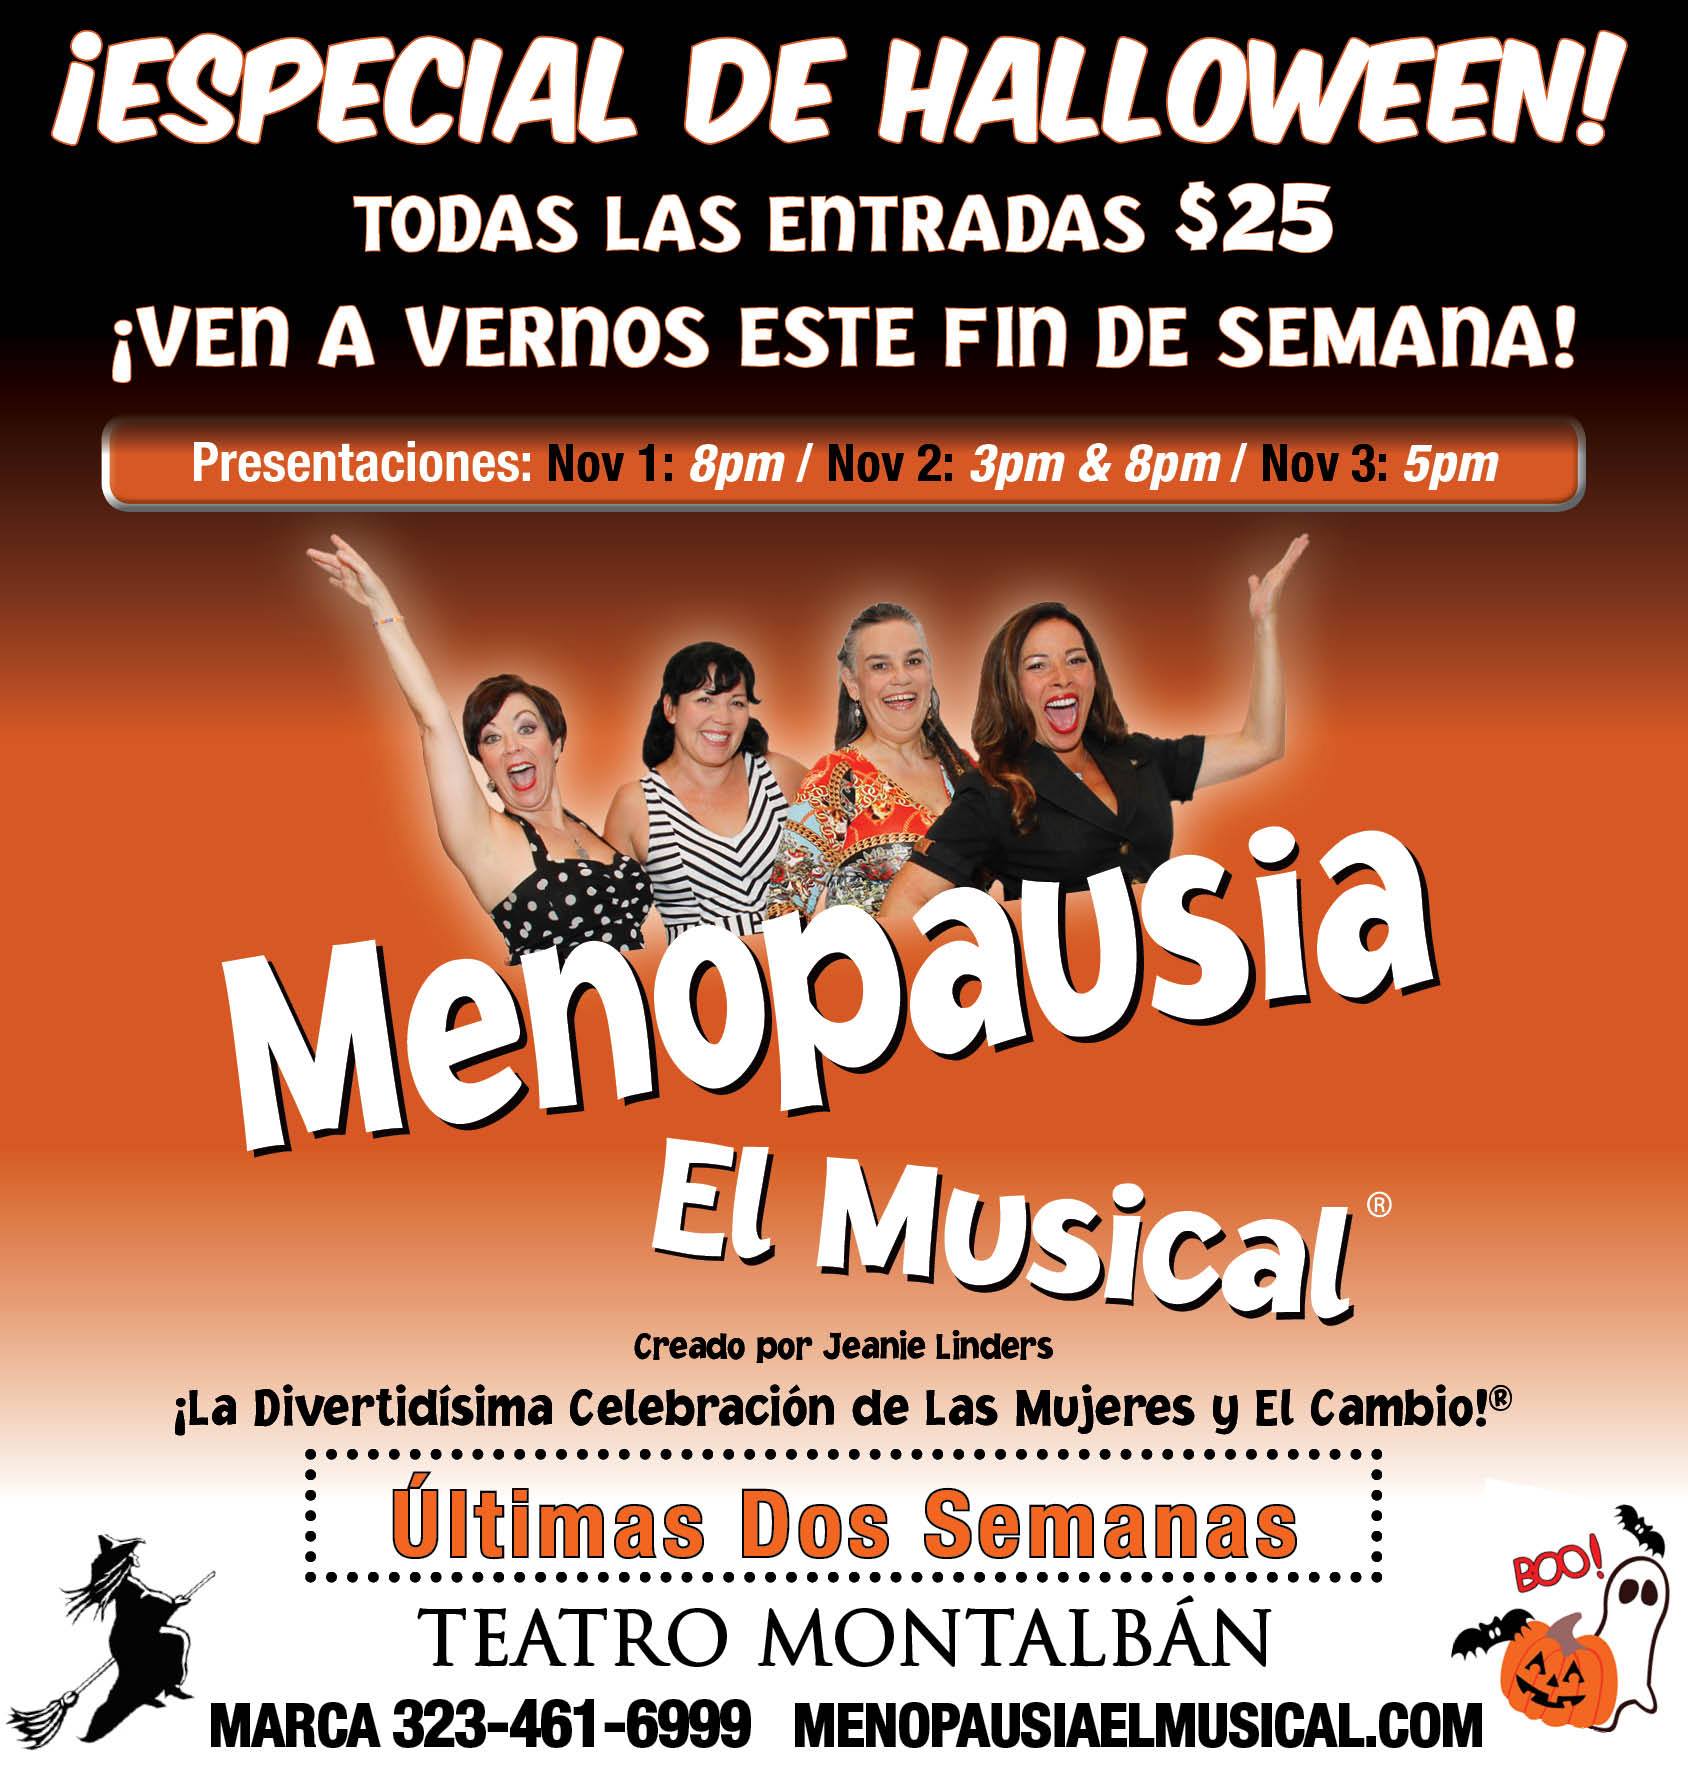 Menopausia El Musical. 2013 Teatro Montalbán Paloma Morales starred as Estrella de Telenovela